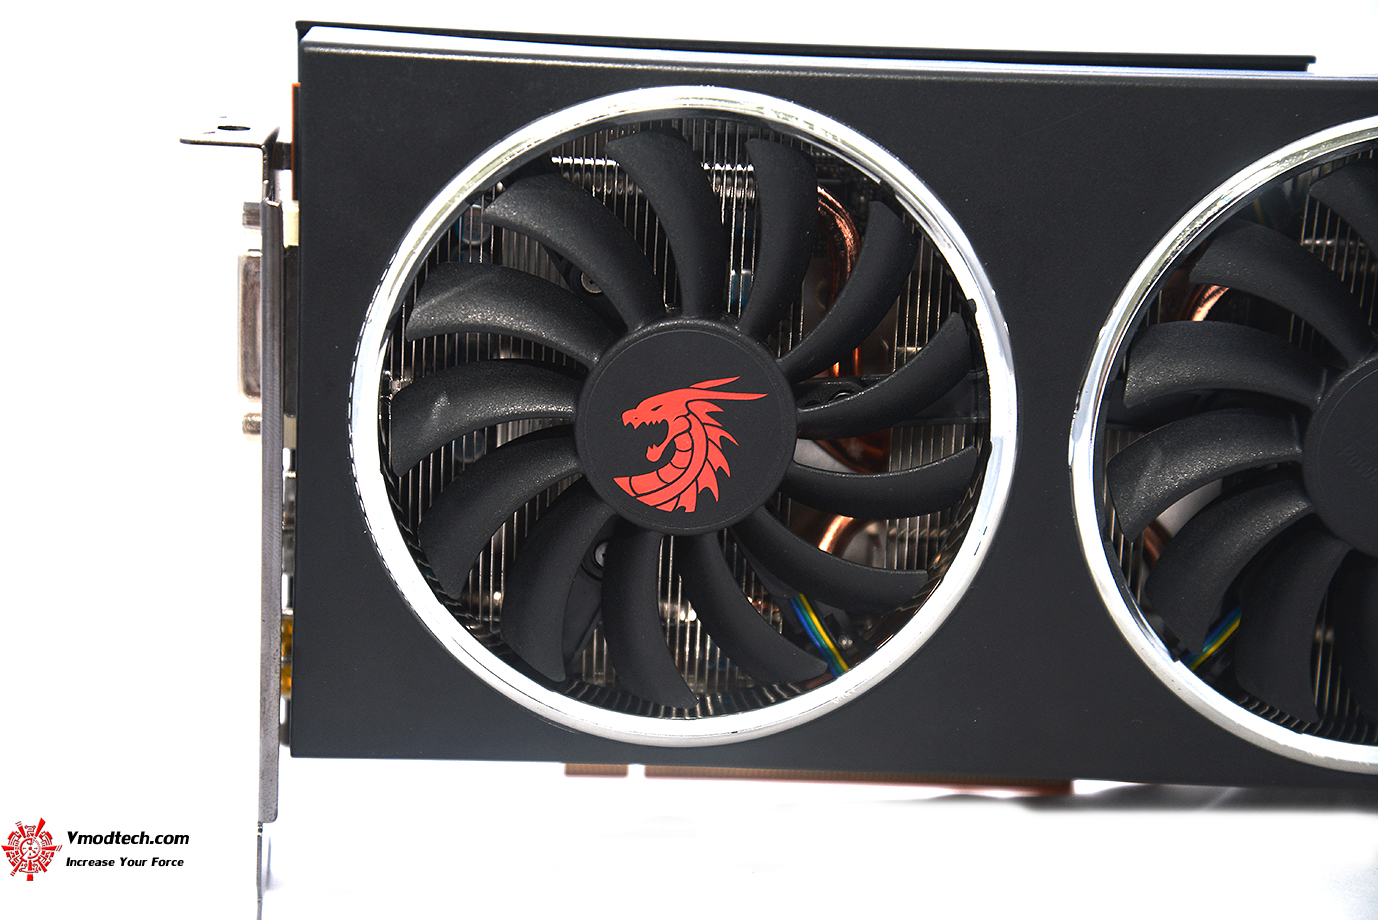 dsc 3935 PowerColor Red Dragon Radeon RX 5500 XT Review